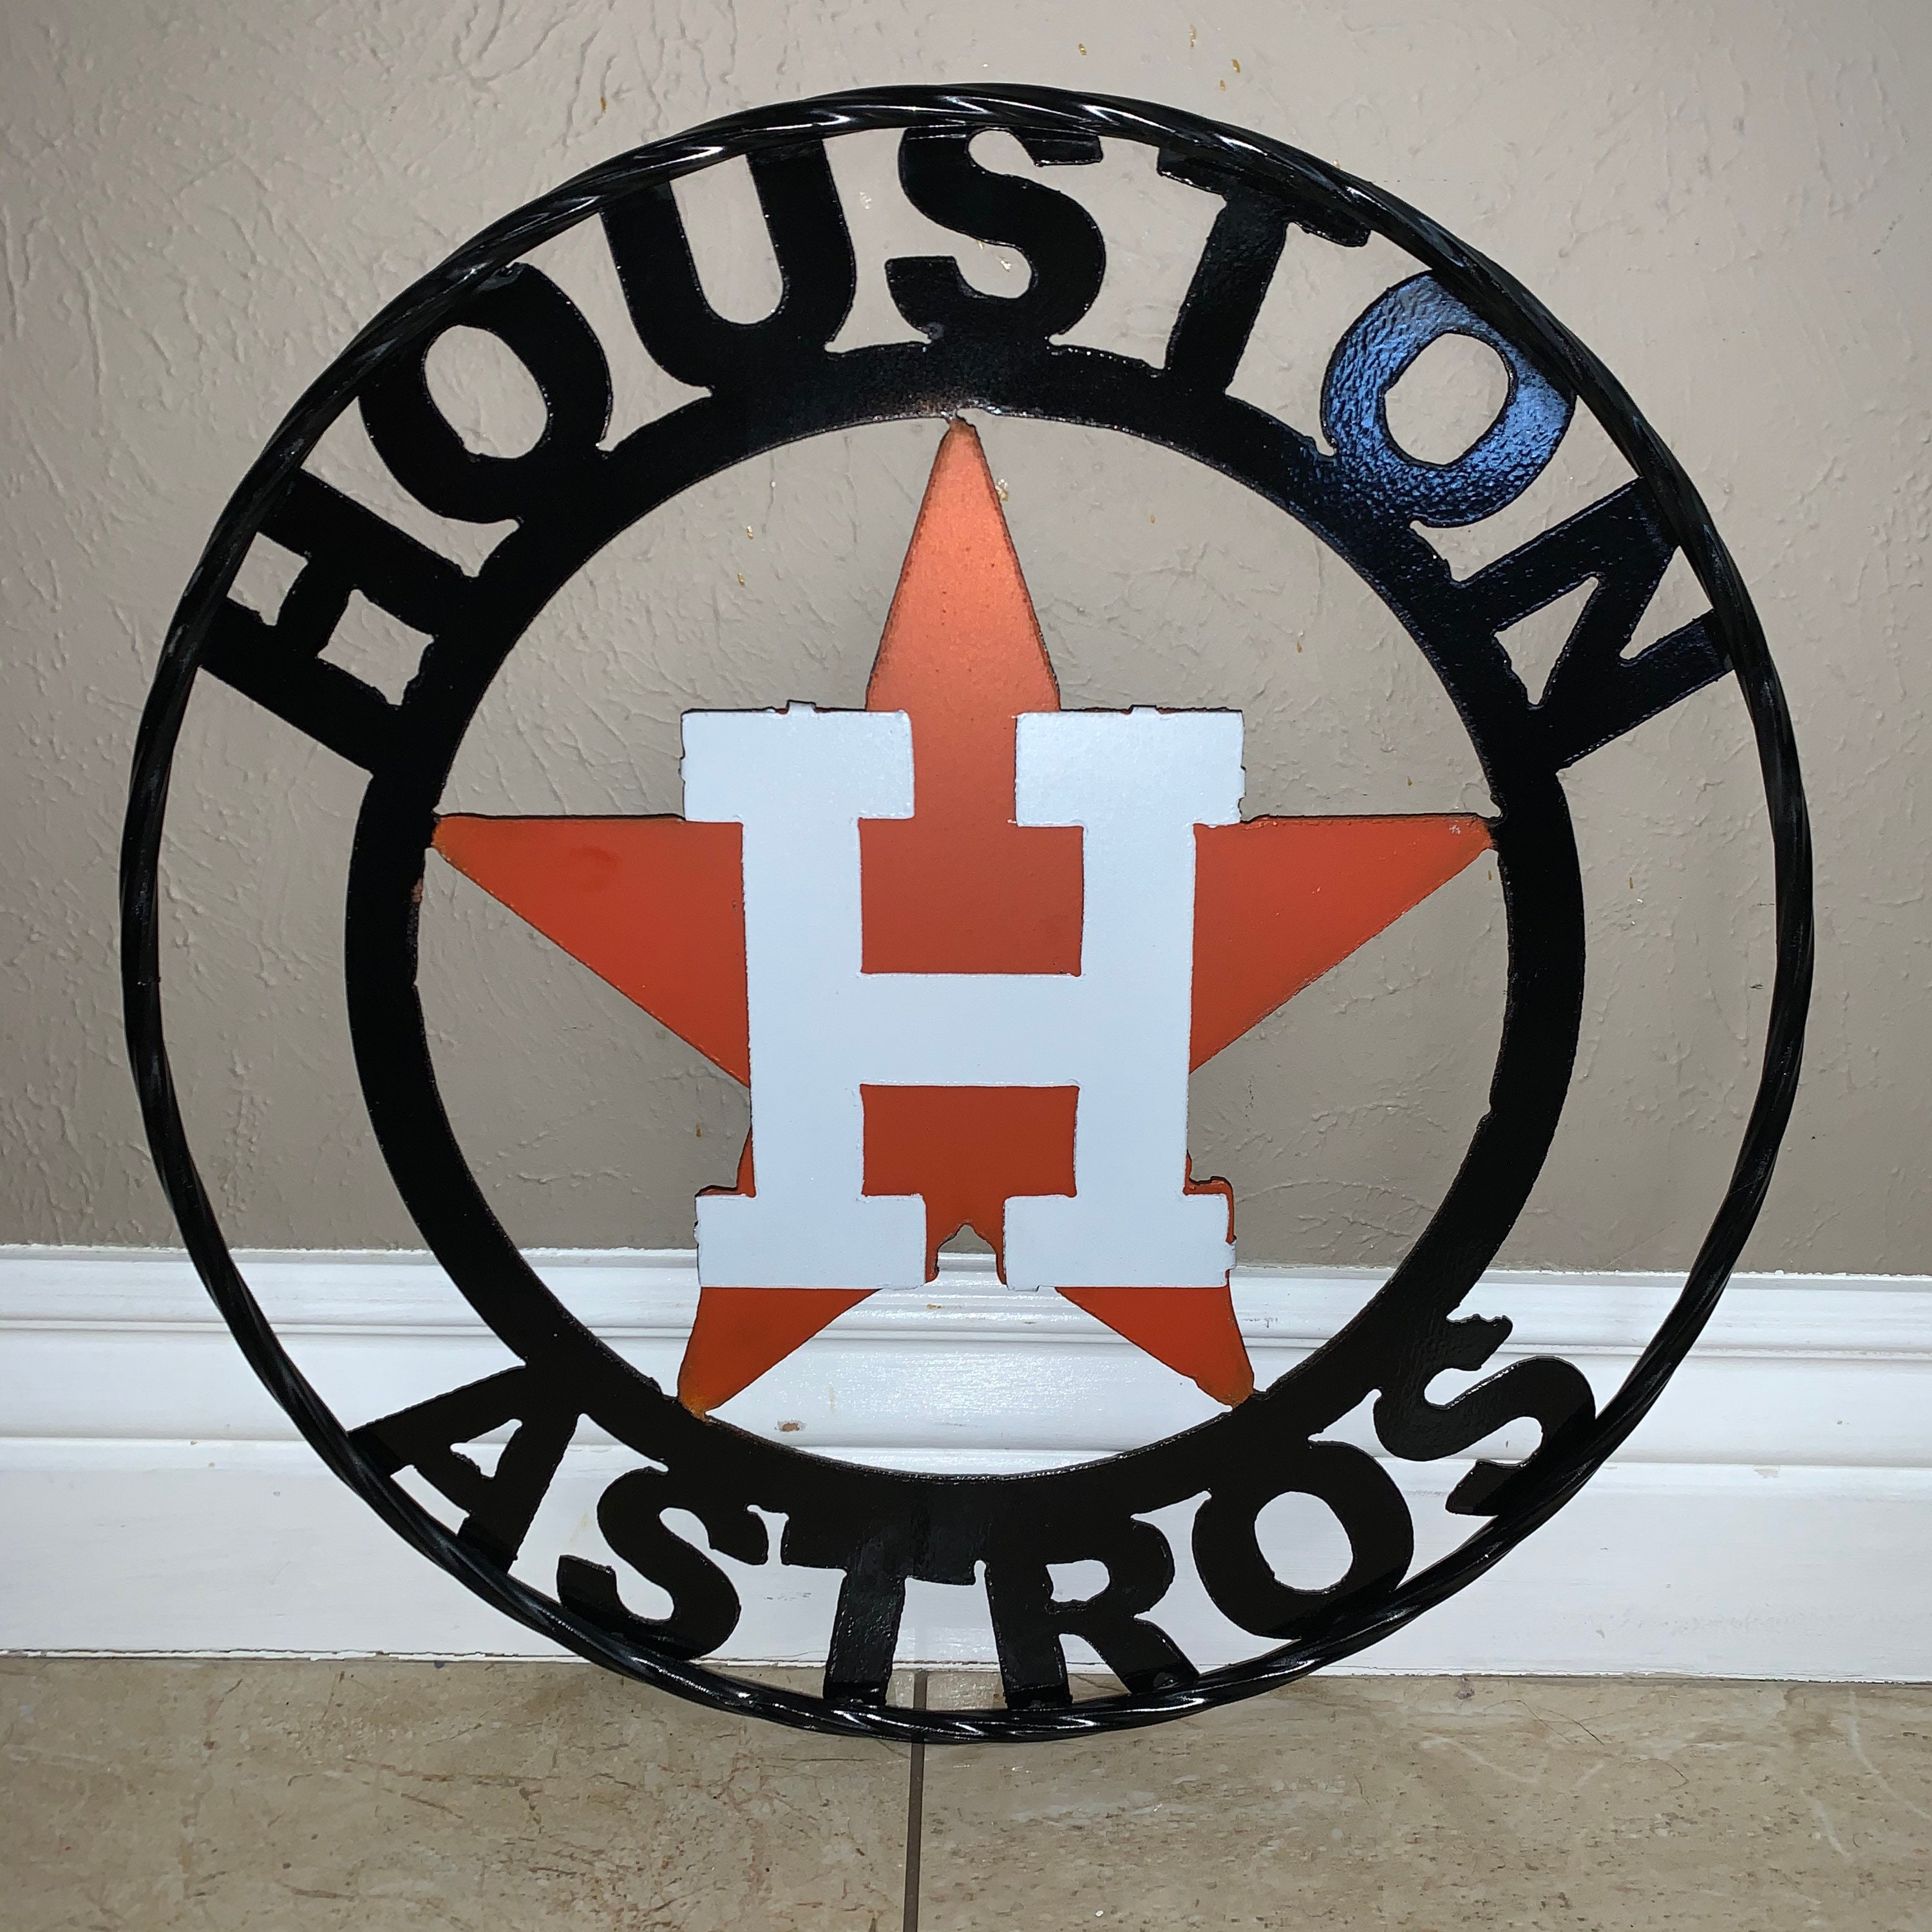 Houston astros best dad ever american flag happy father's day shirt -  Teefefe Premium ™ LLC